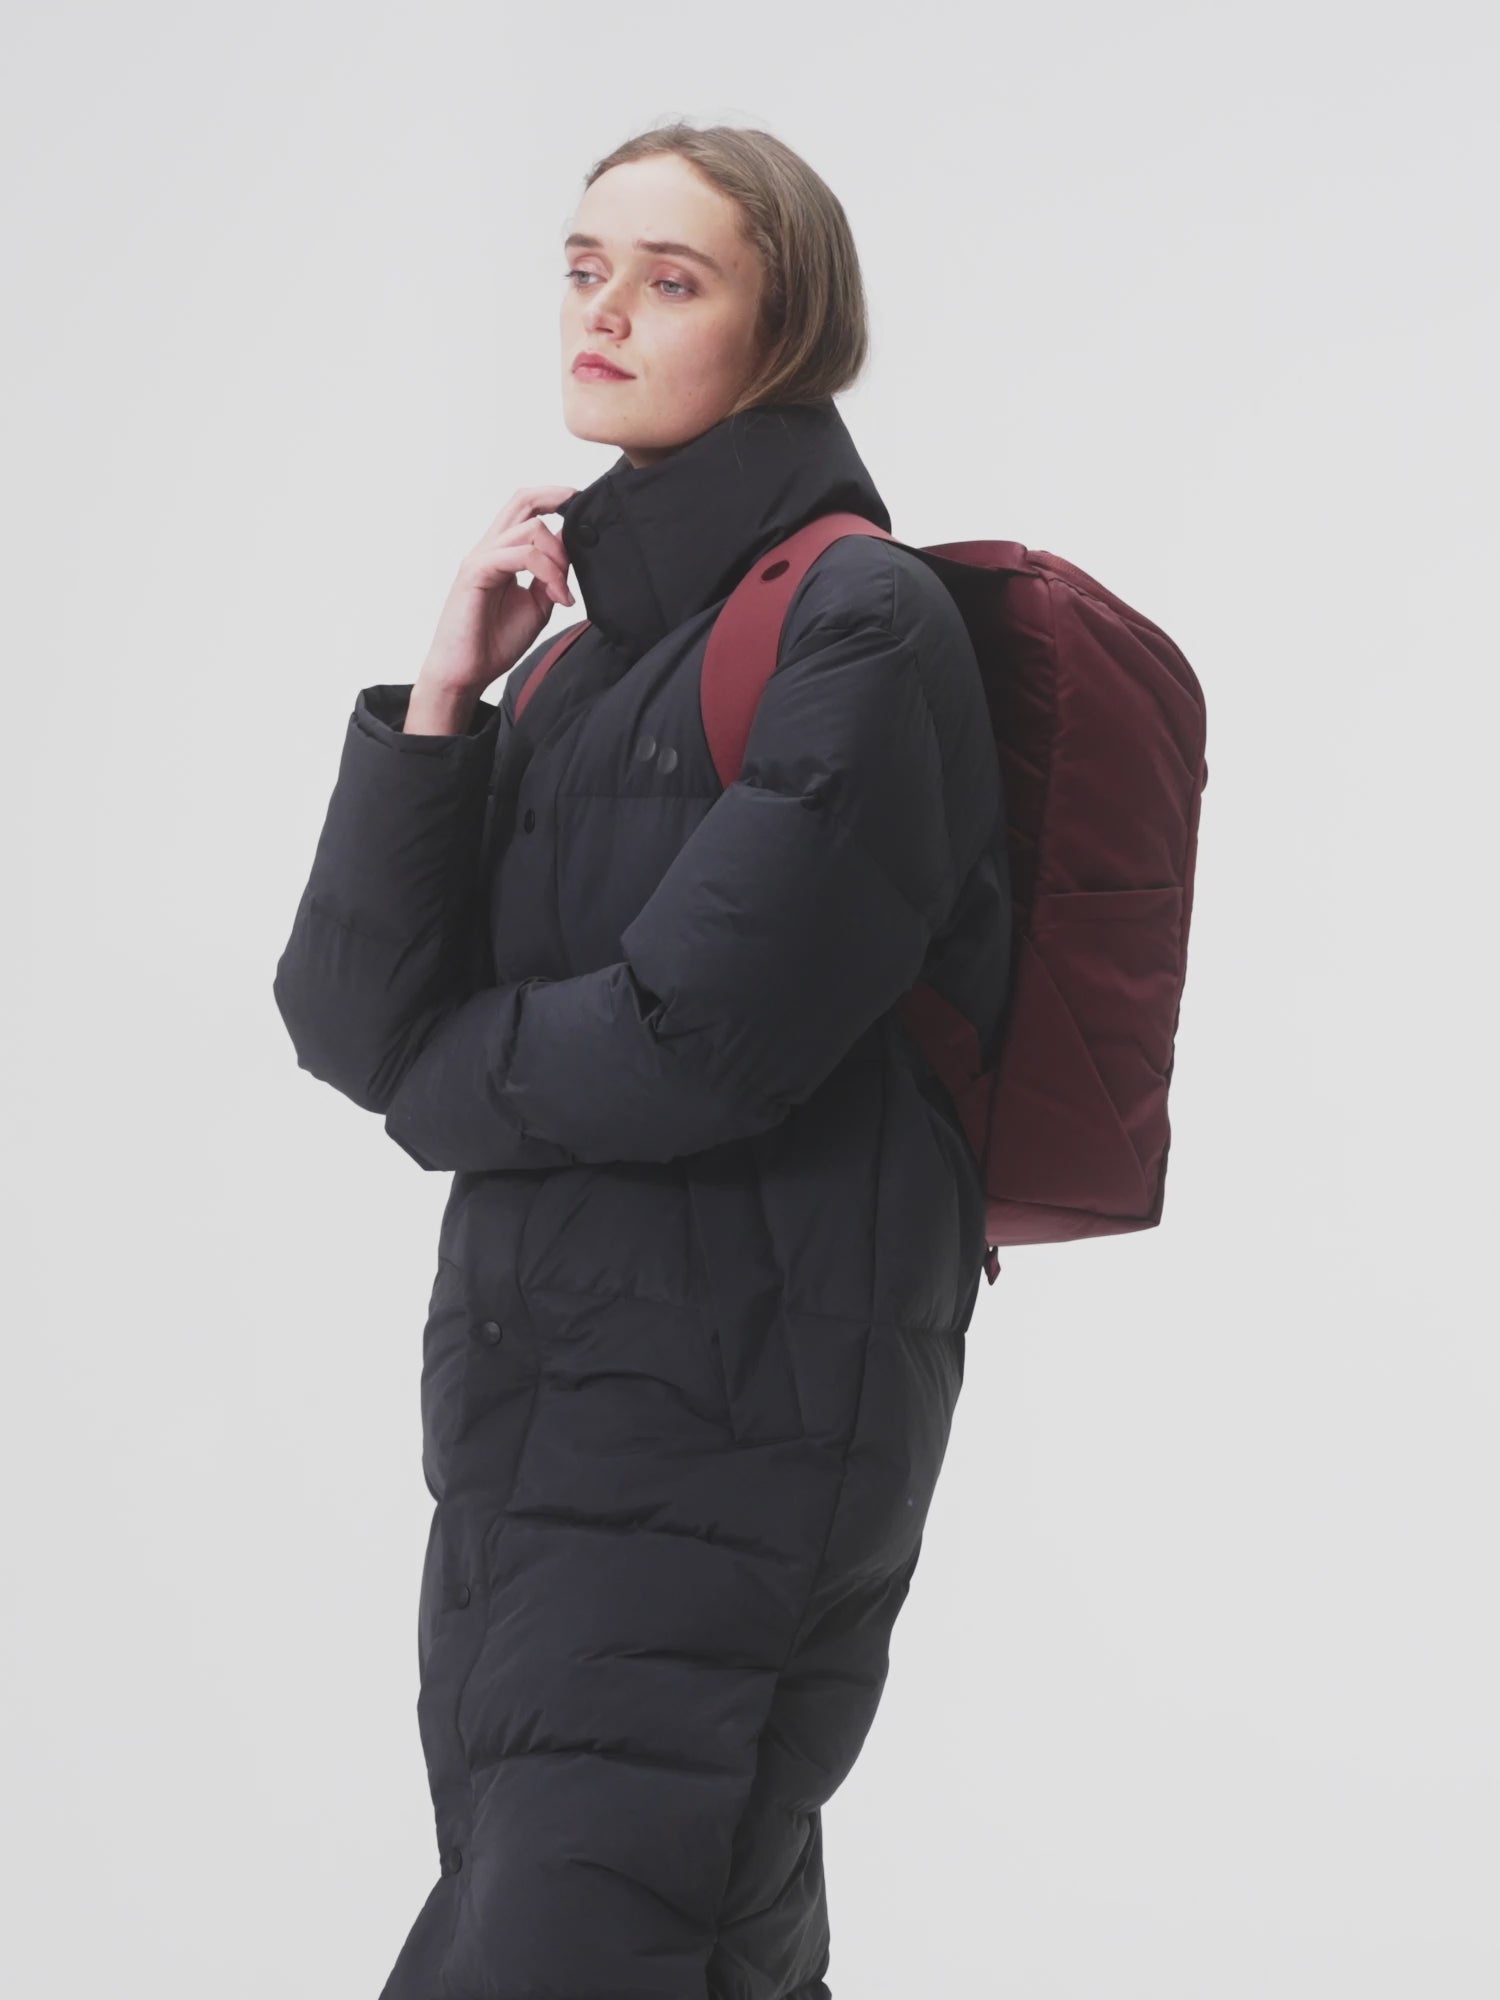 pinqponq-backpack-Purik-Pinot-Red-model-video